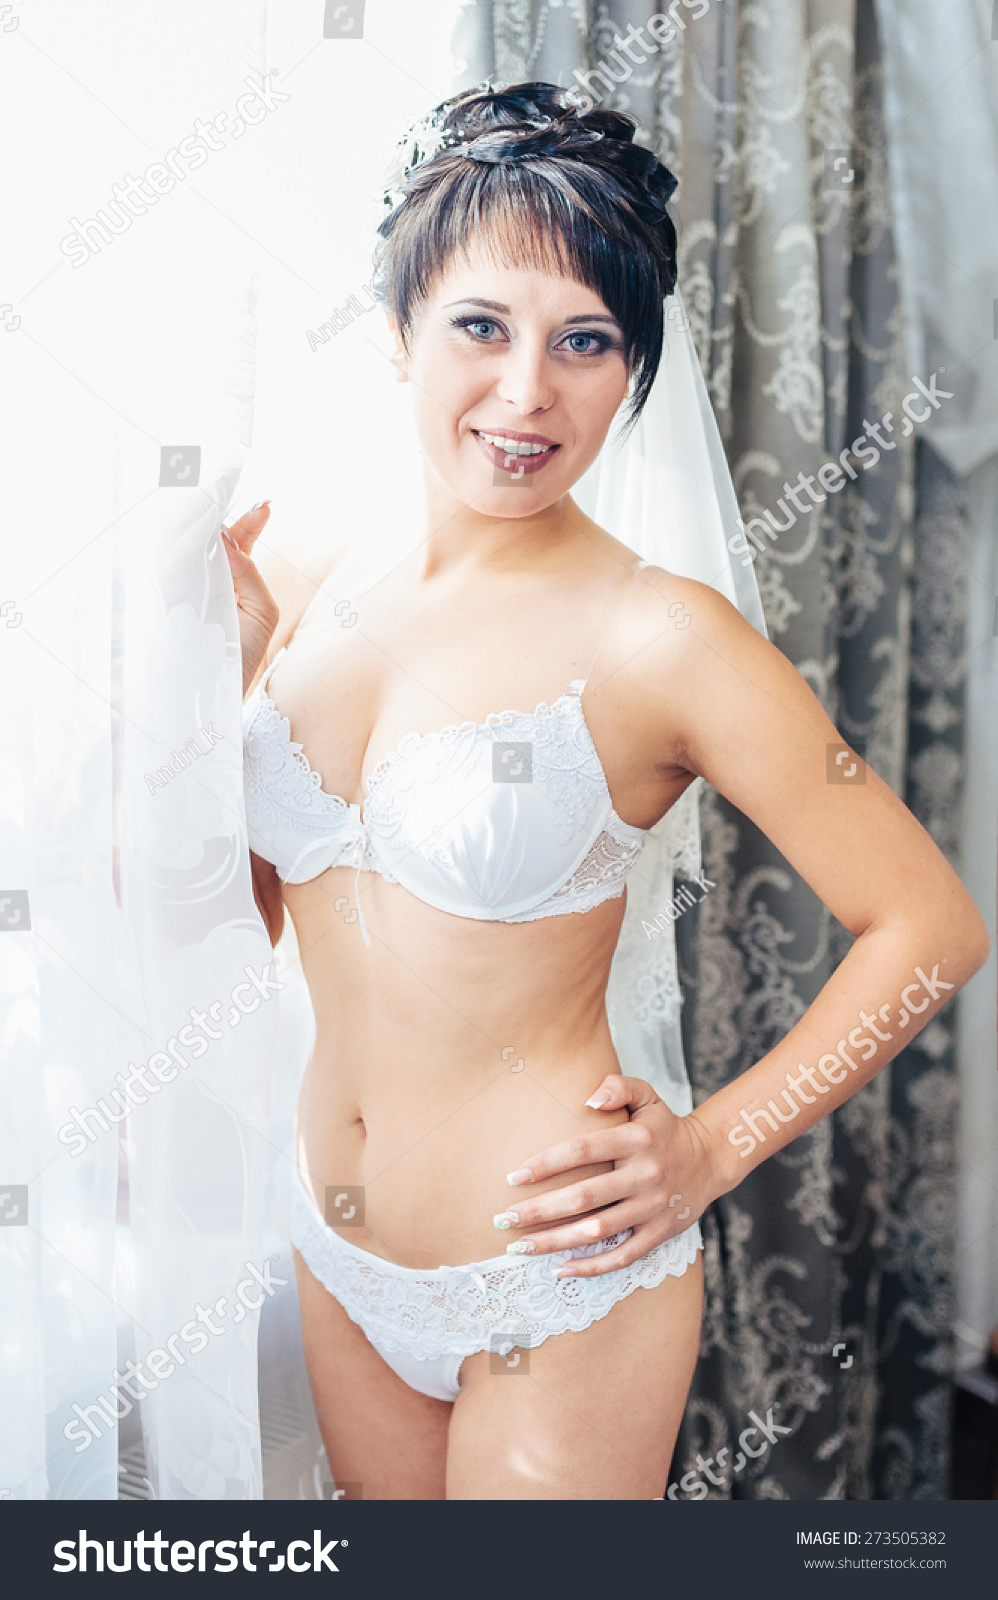 Nudes Brides Free Sexy Wife